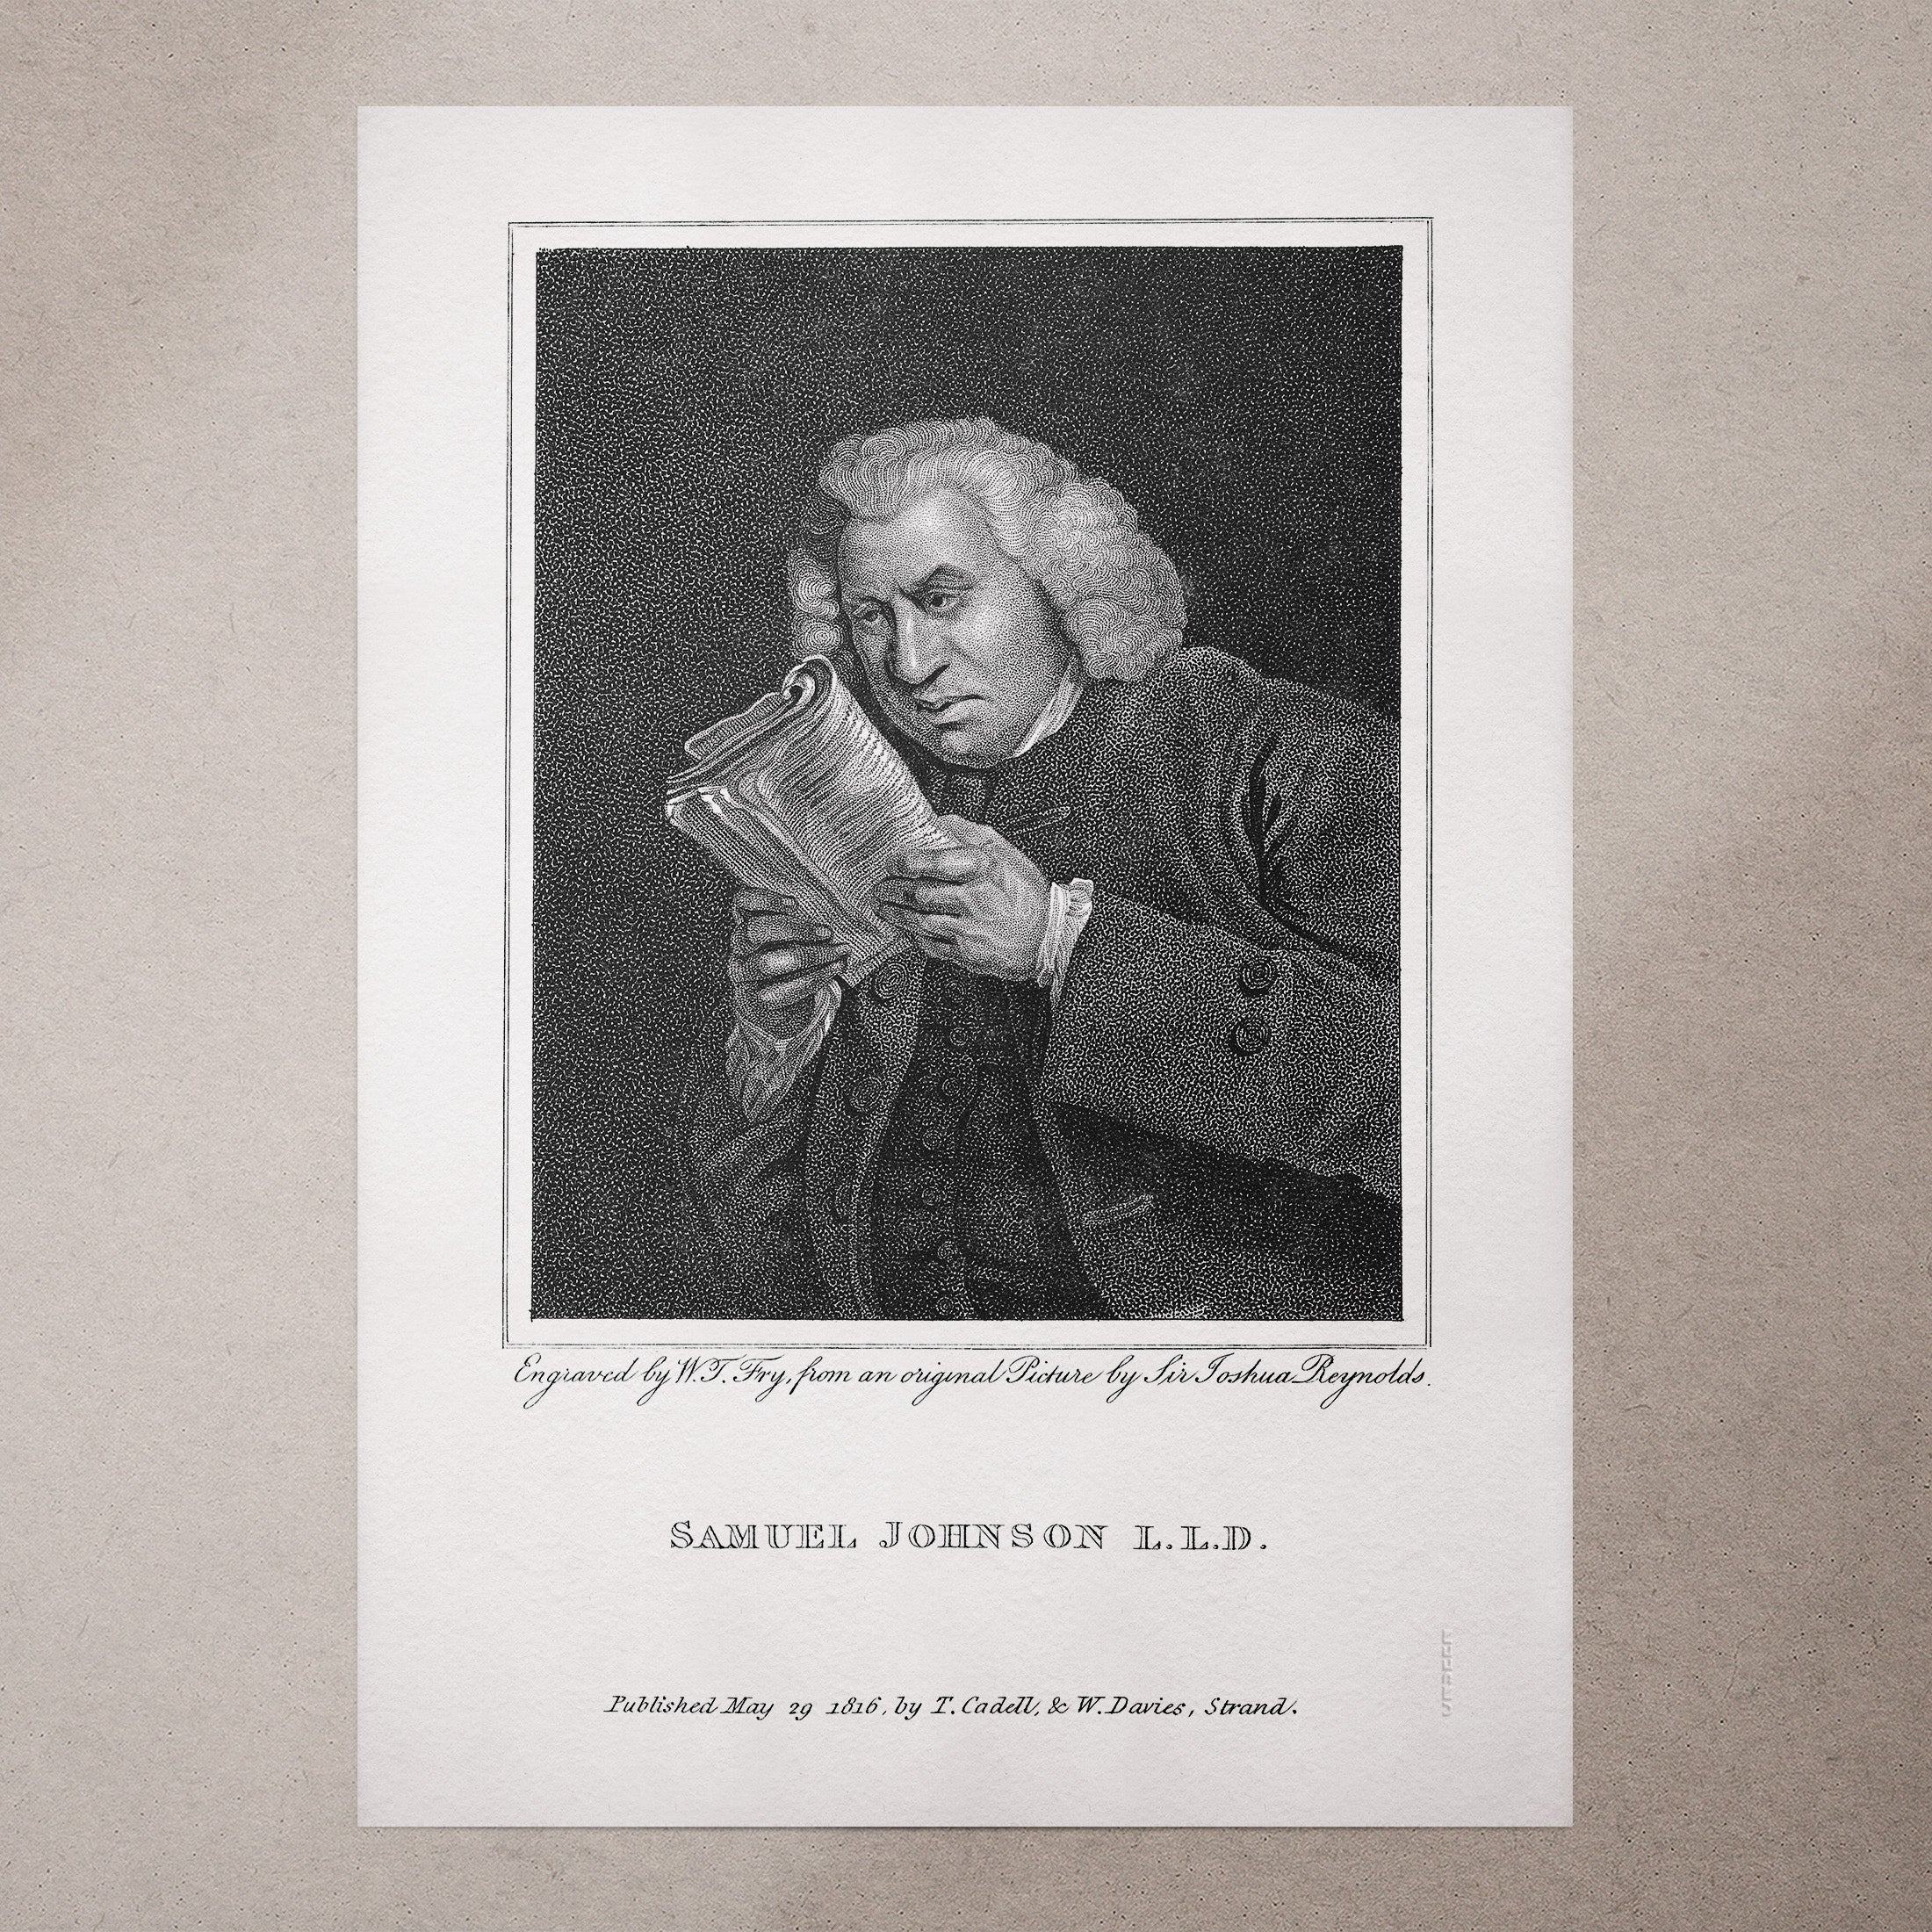 Samuel Johnson LLD by Wiliam Thomas Fry, 1816